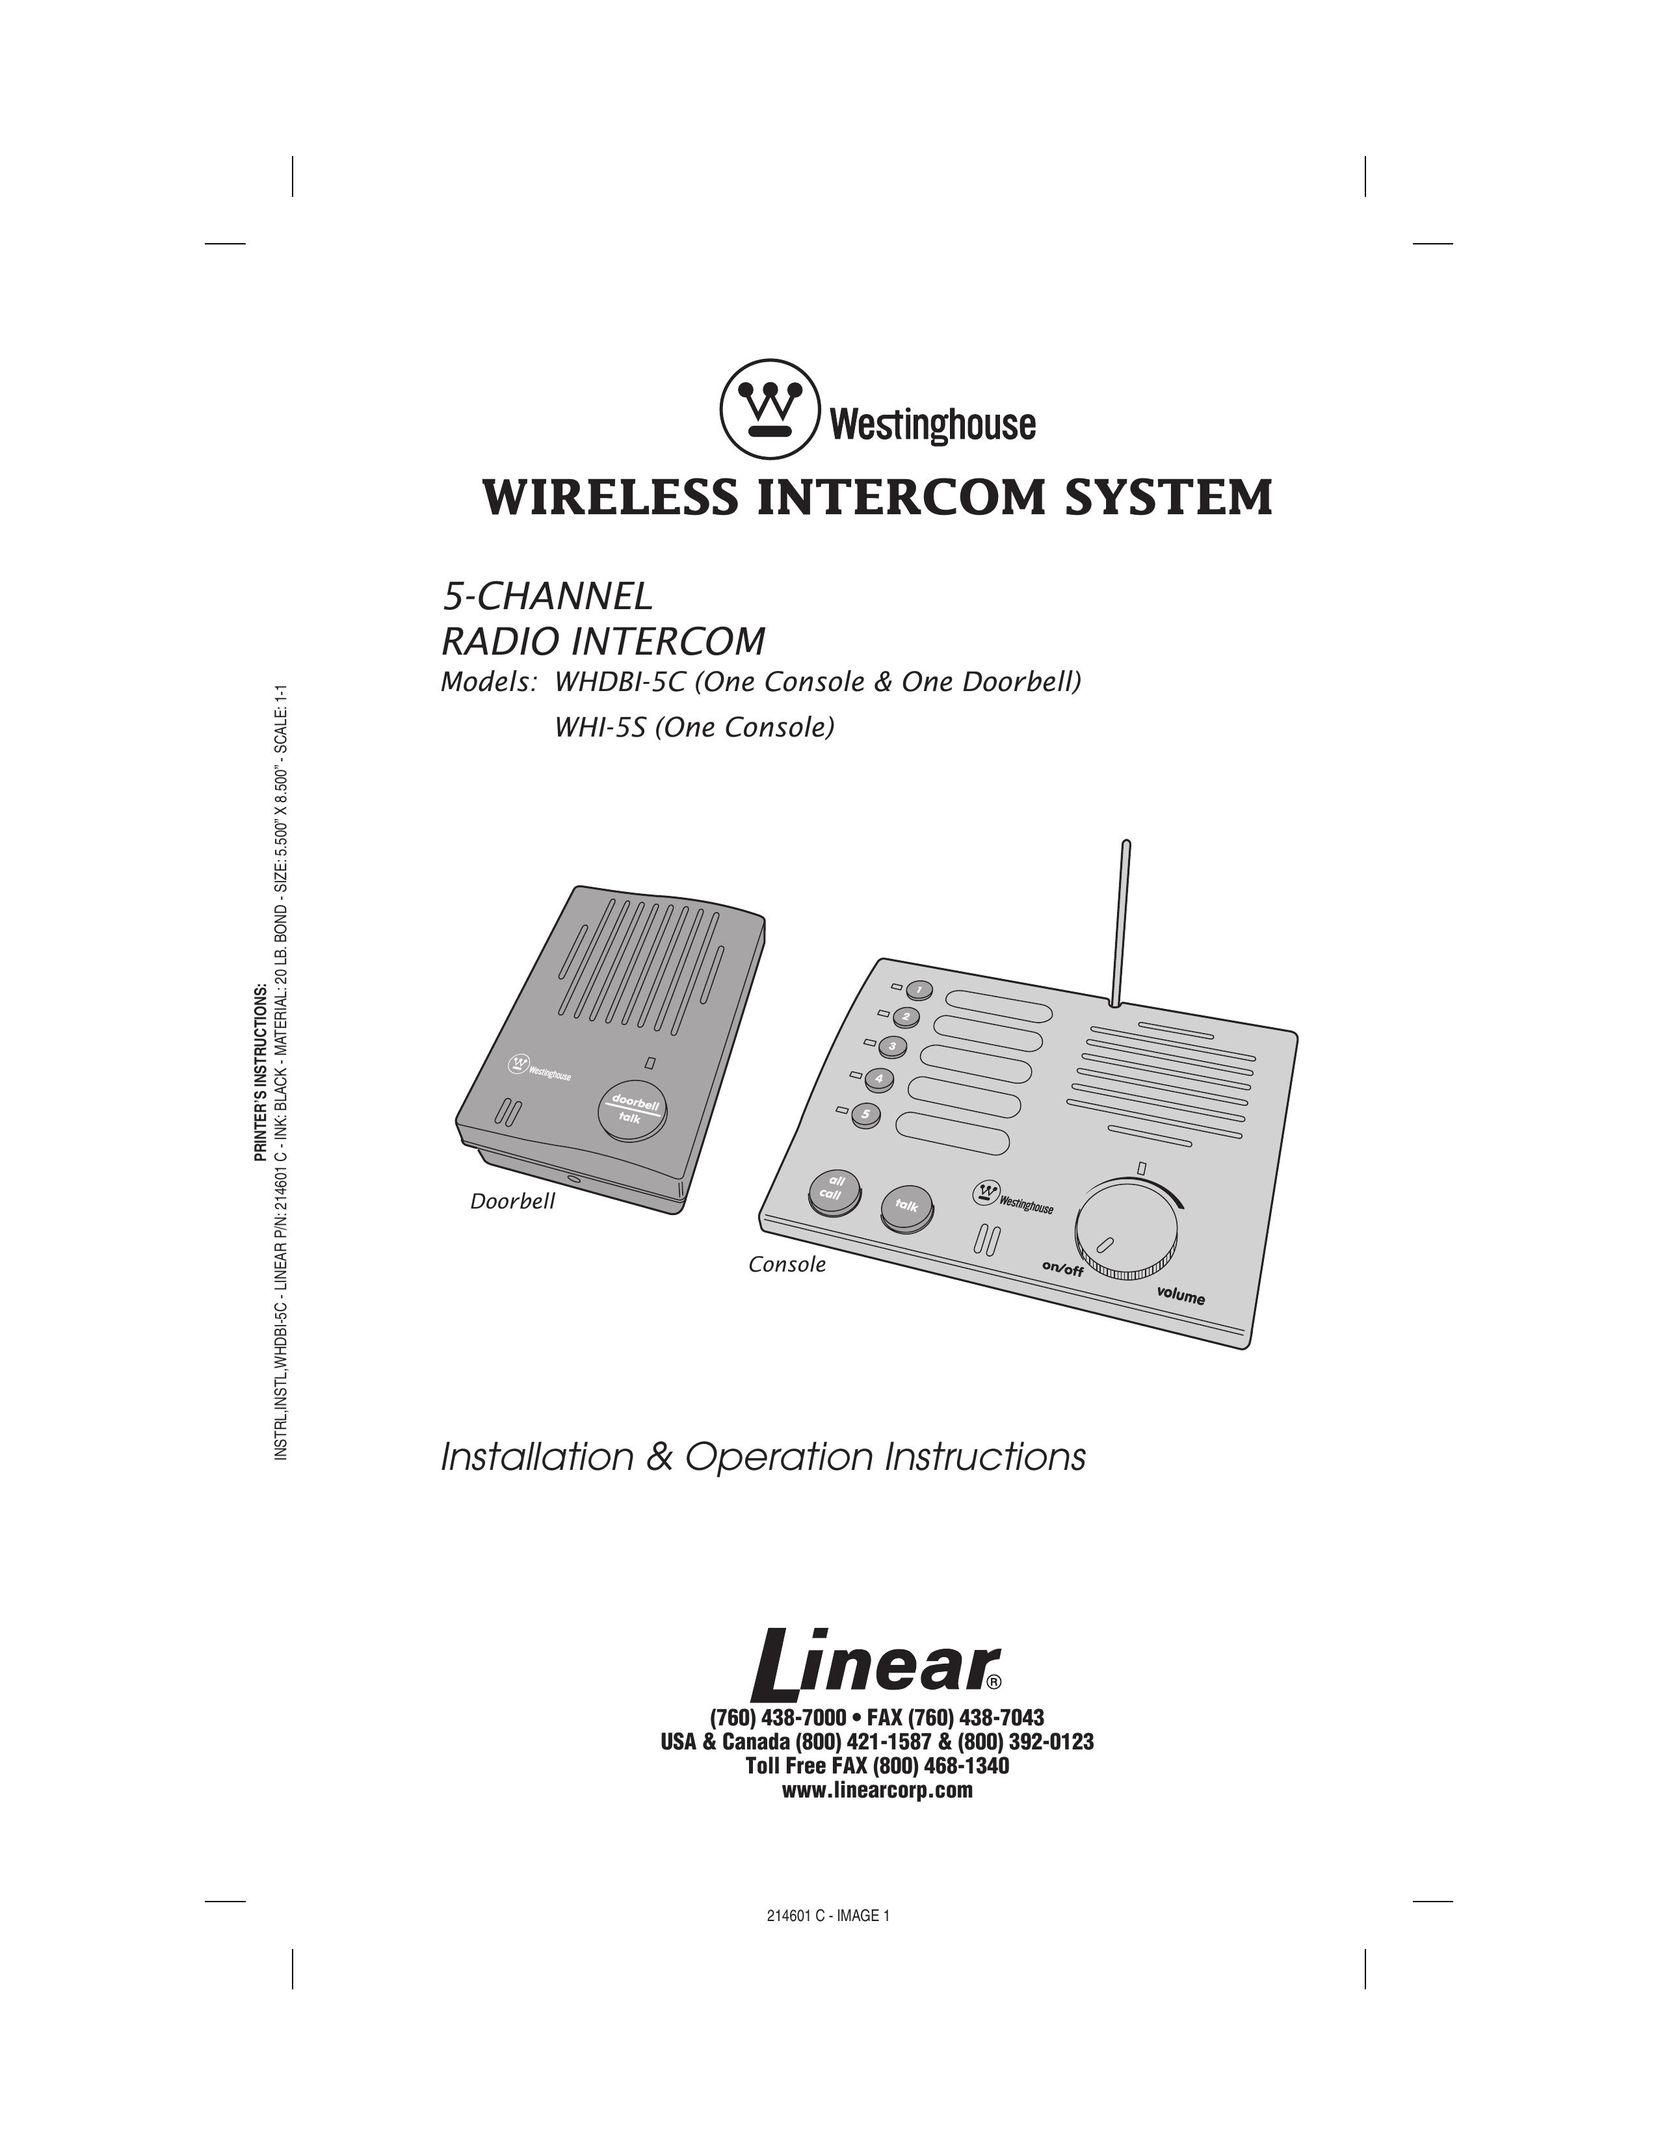 Westinghouse WHI-5S Intercom System User Manual